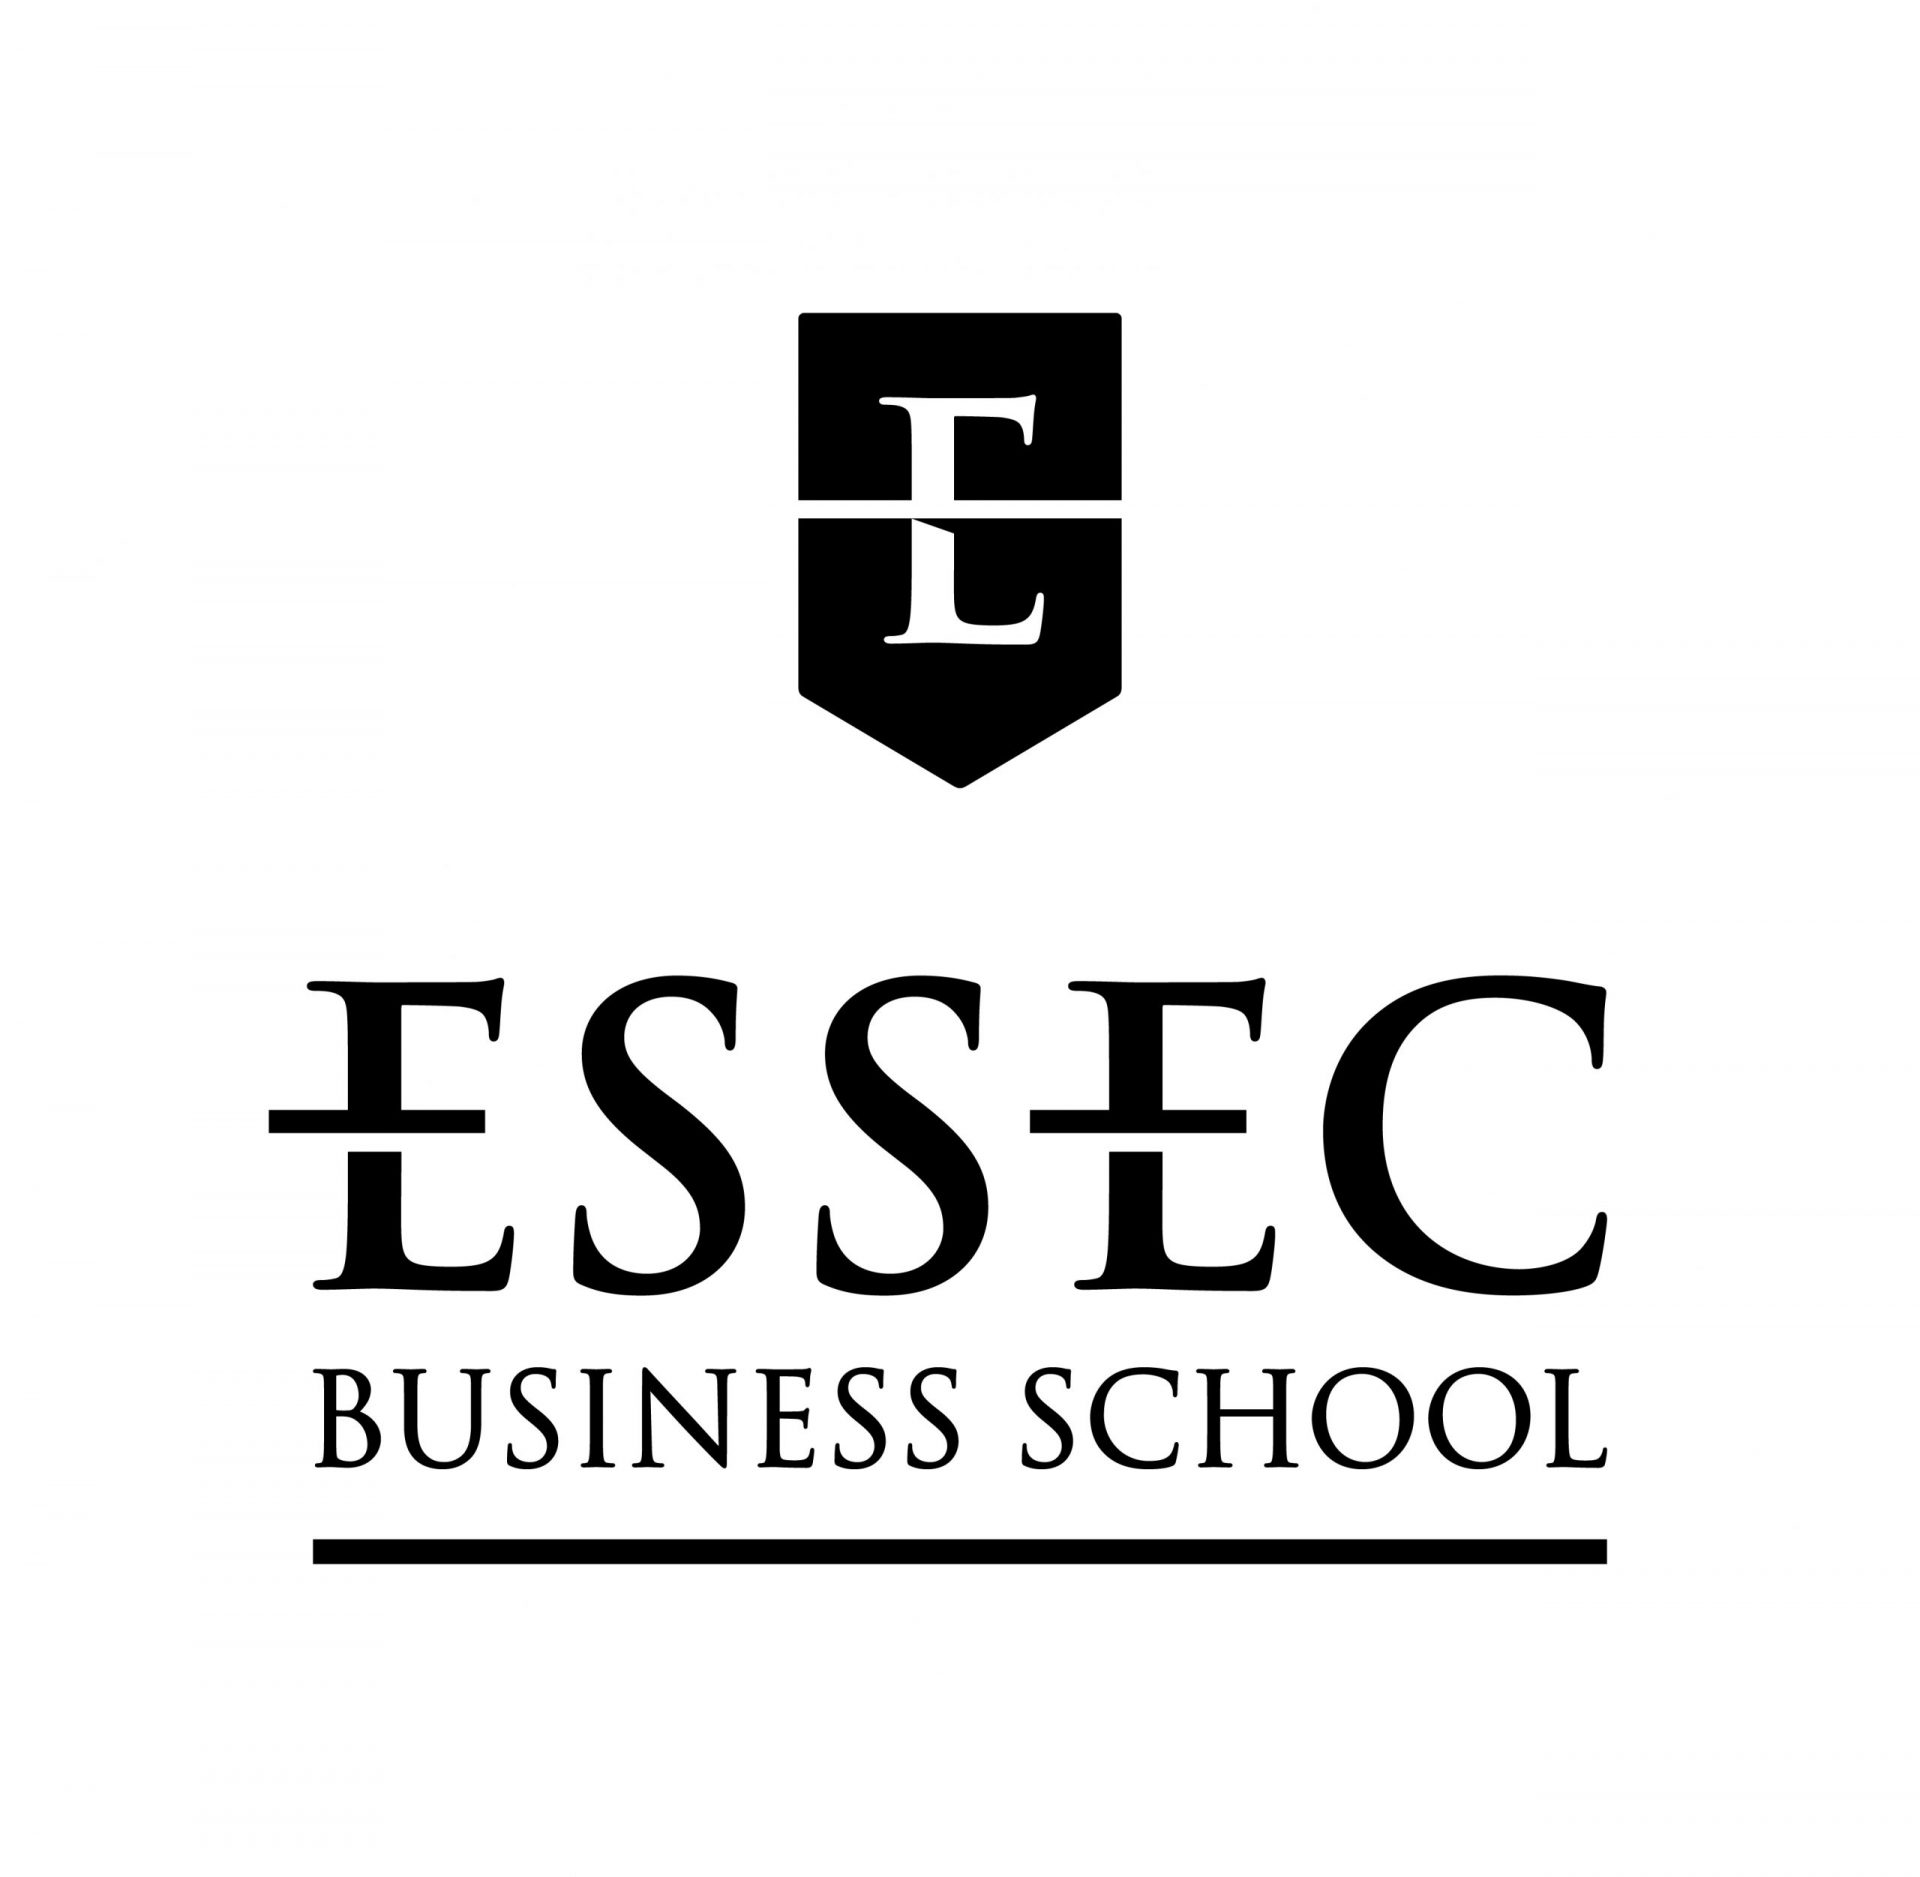 logo-essec-business-school